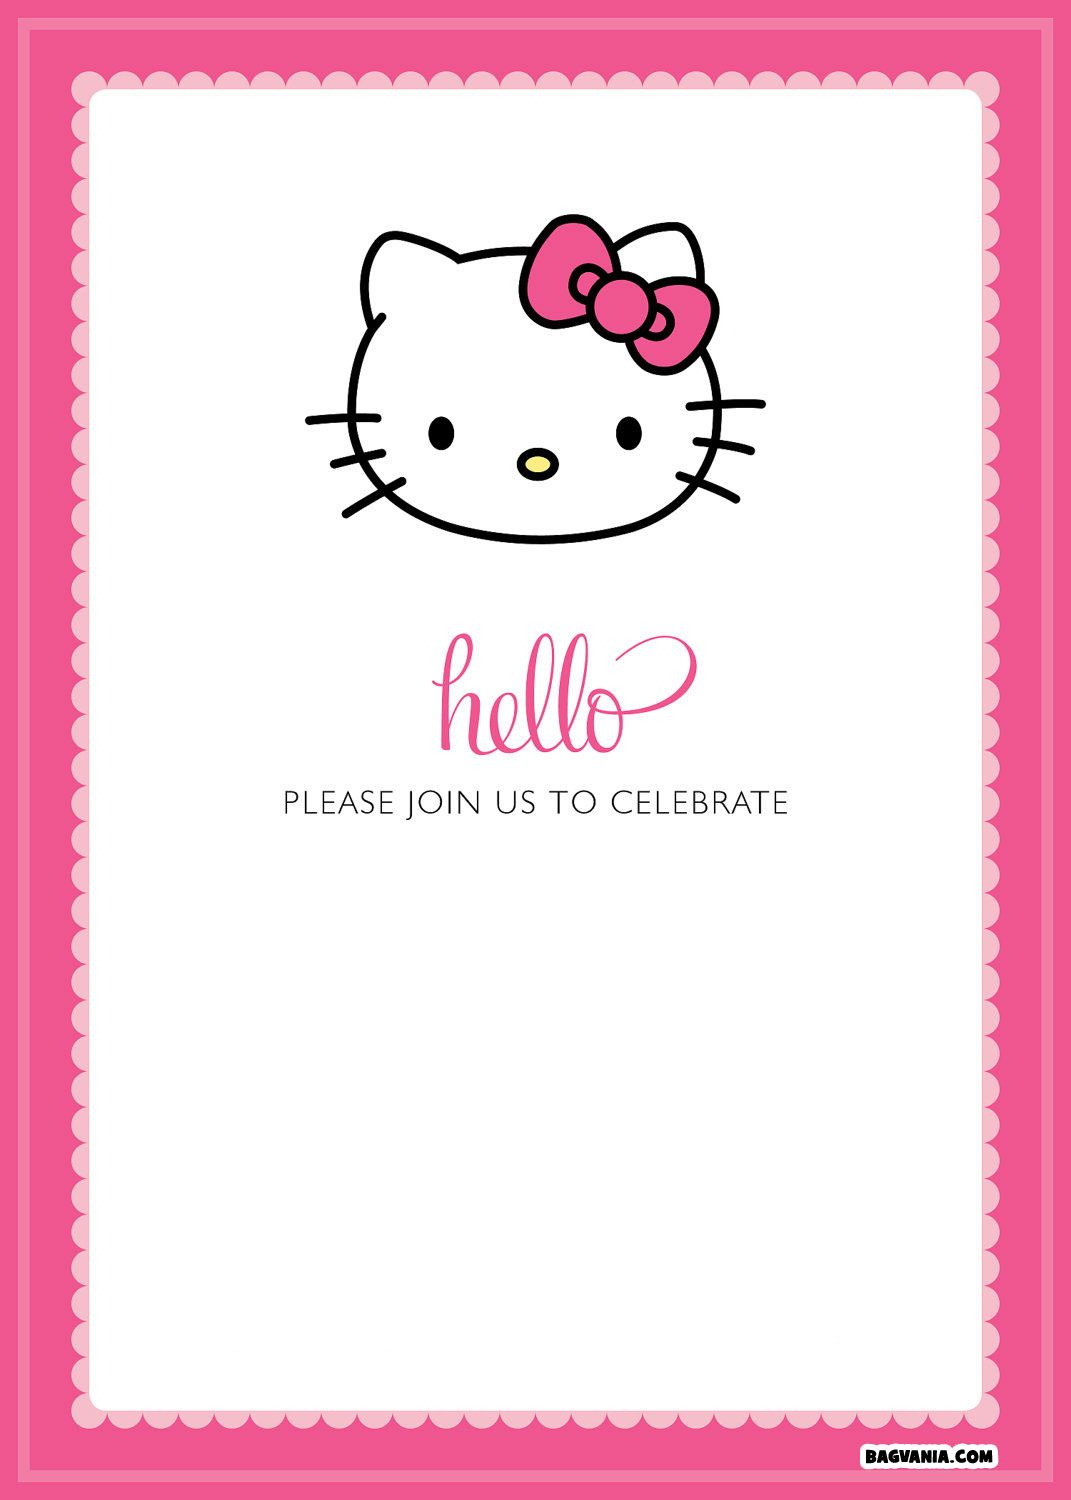 Free Printable Hello Kitty Birthday Invitations Bagvania Free inside proportions 1071 X 1500